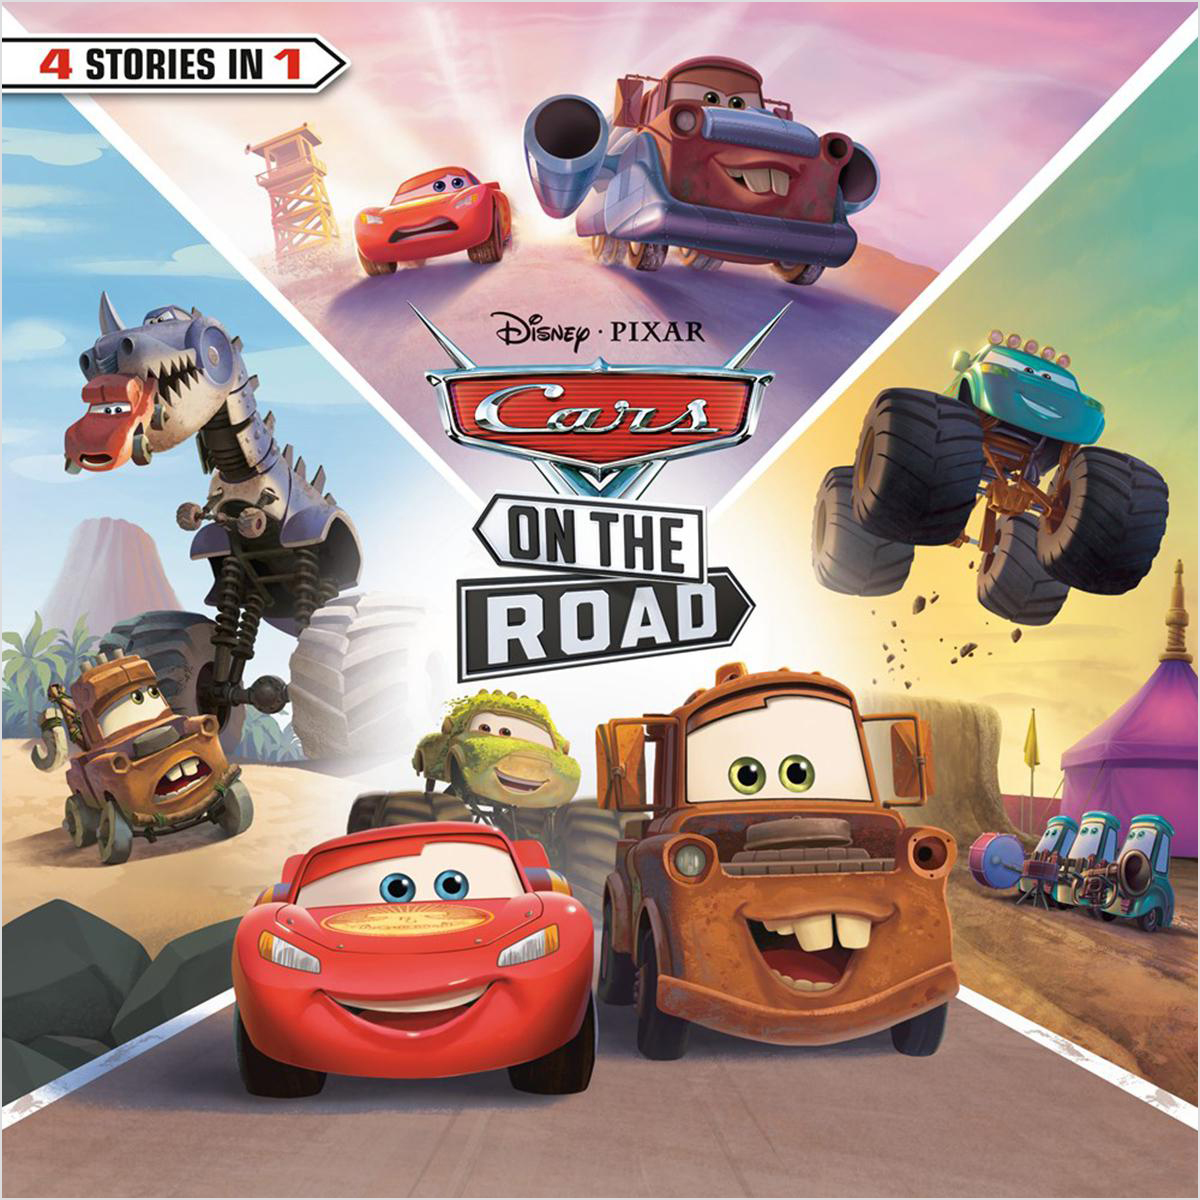  Disney/Pixar Cars: On the Road 